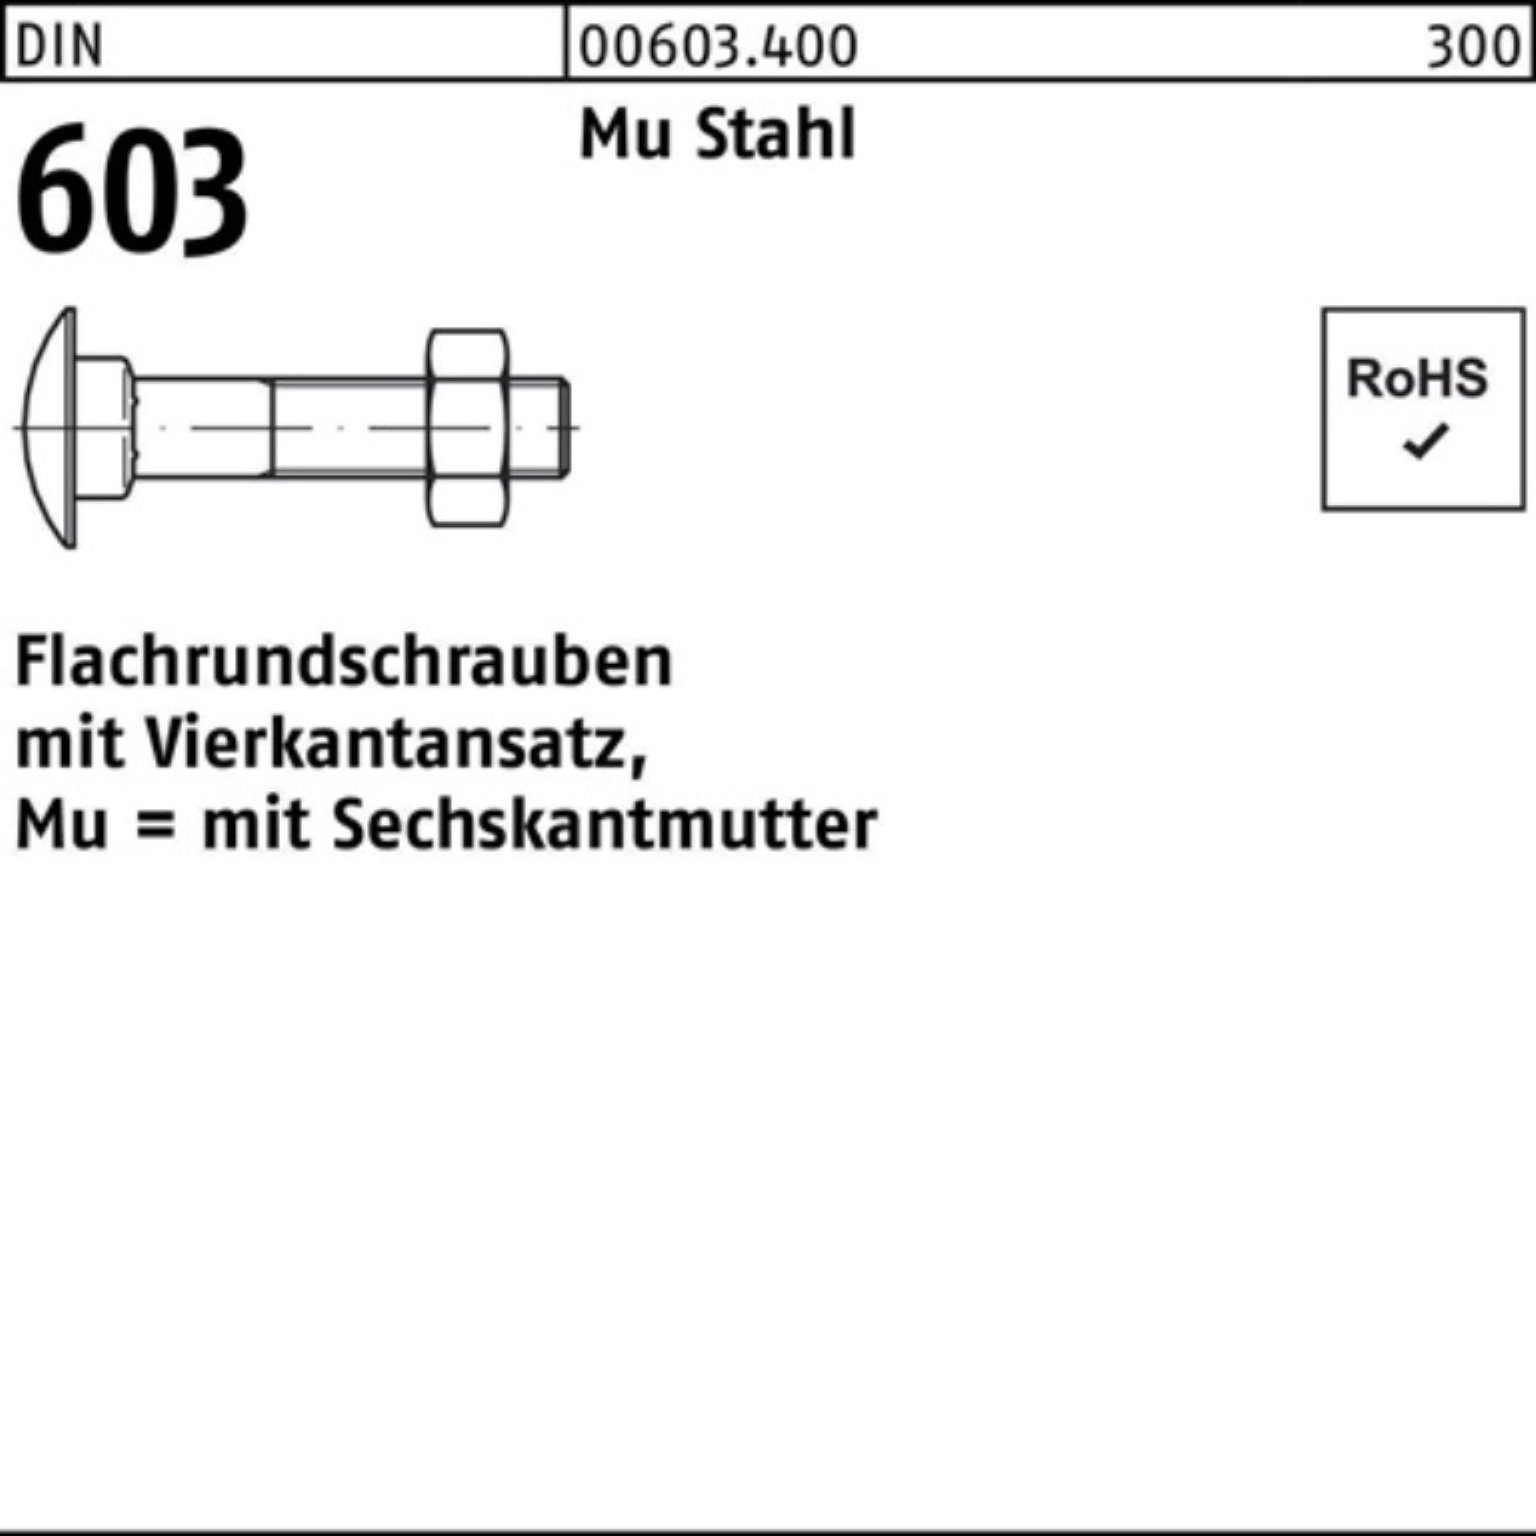 Vierkantansatz/6-ktmutter Flachrundschraube Reyher 500er M6x20 Schraube DIN M Pack 603